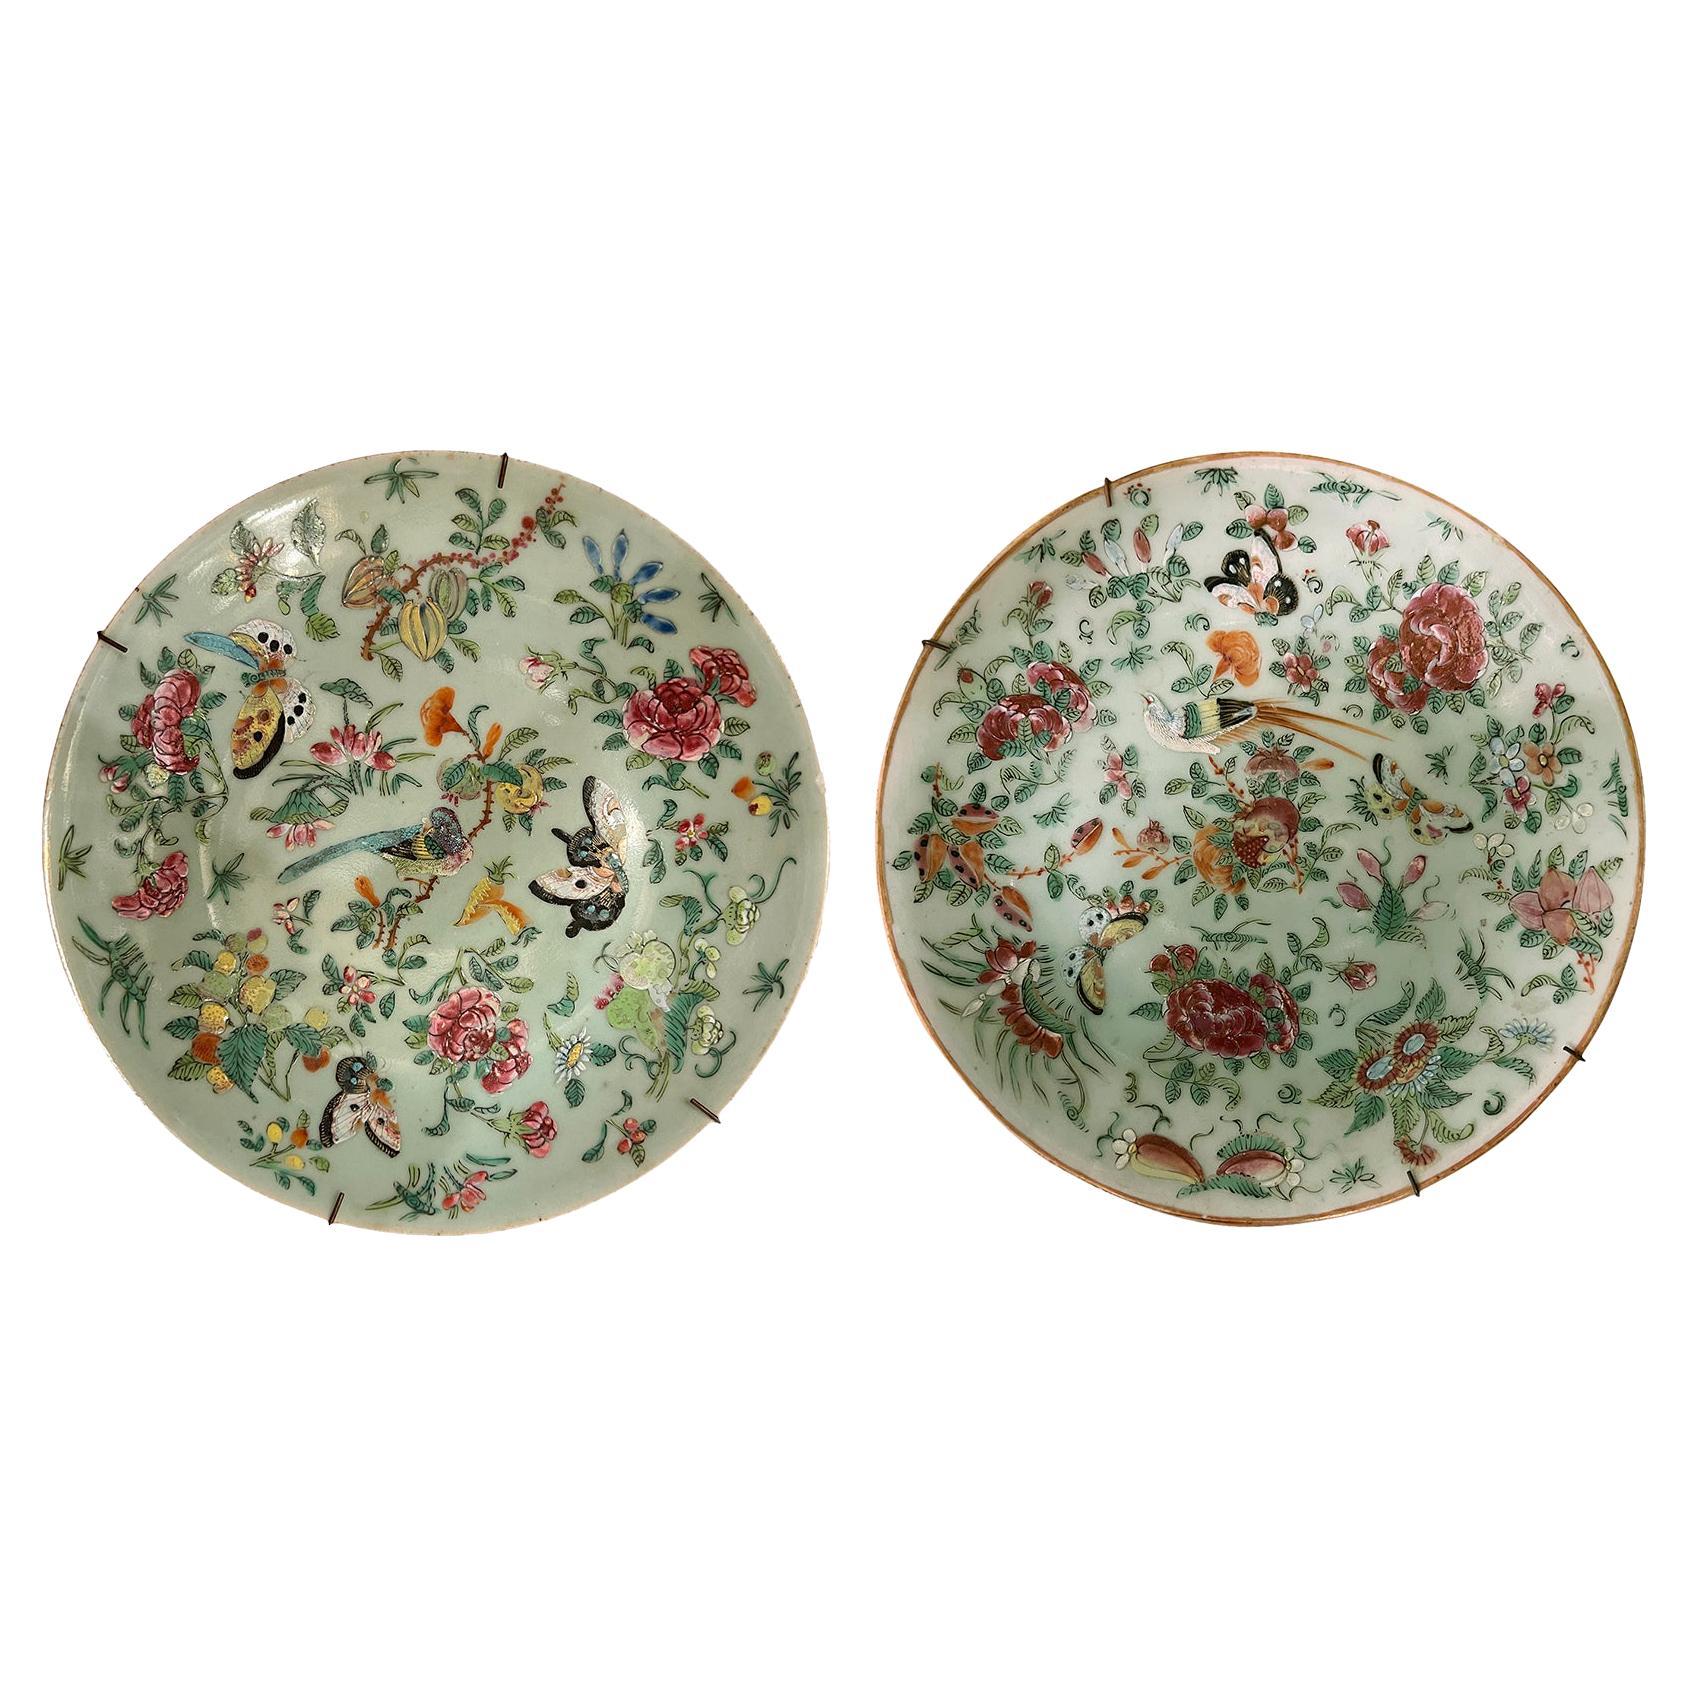 Pair of Porcelain Hand-Painted Decorative Plates